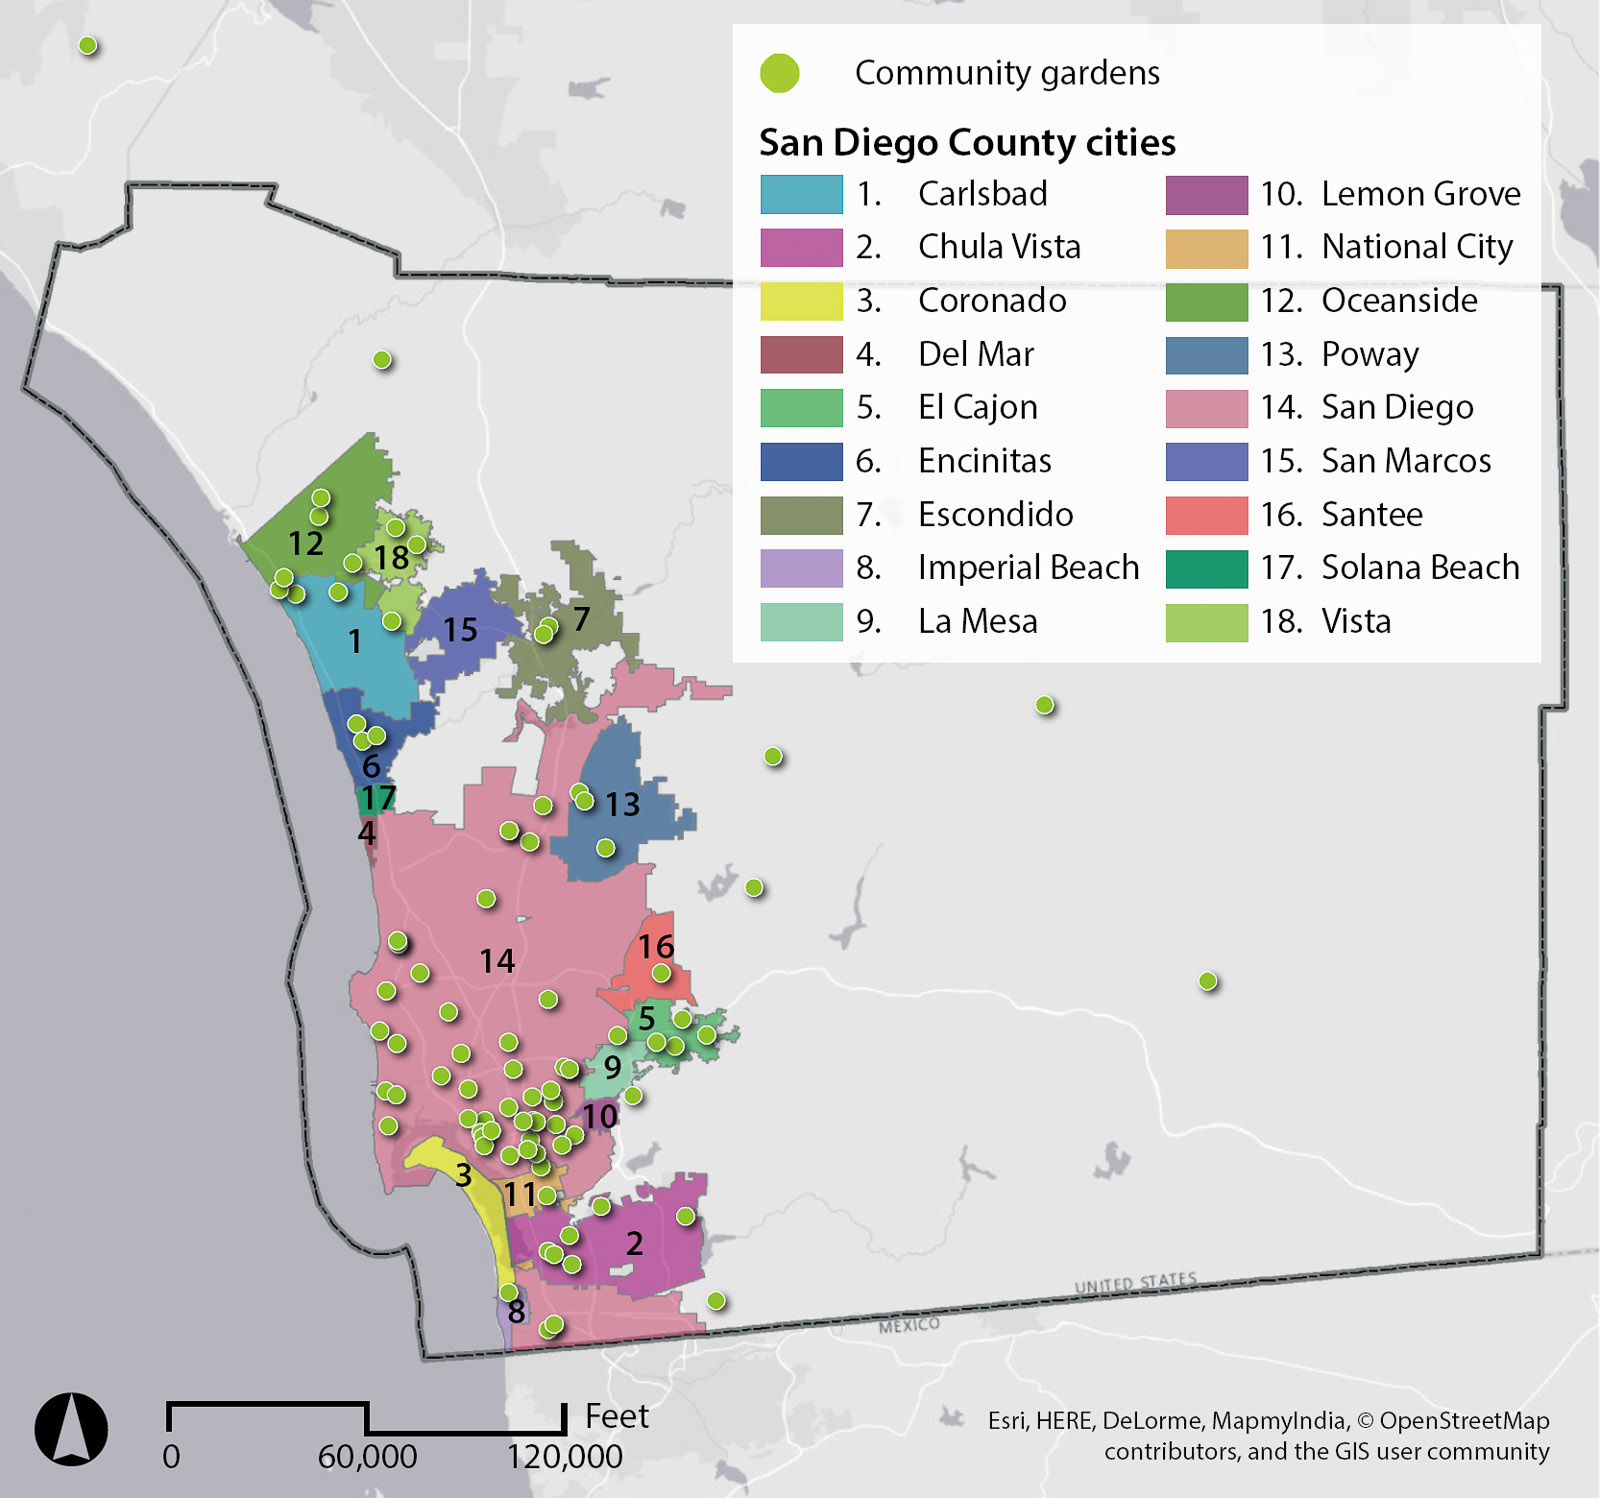 The San Diego Community Garden Network. Map created by Arturo Tovar-Villalobos.